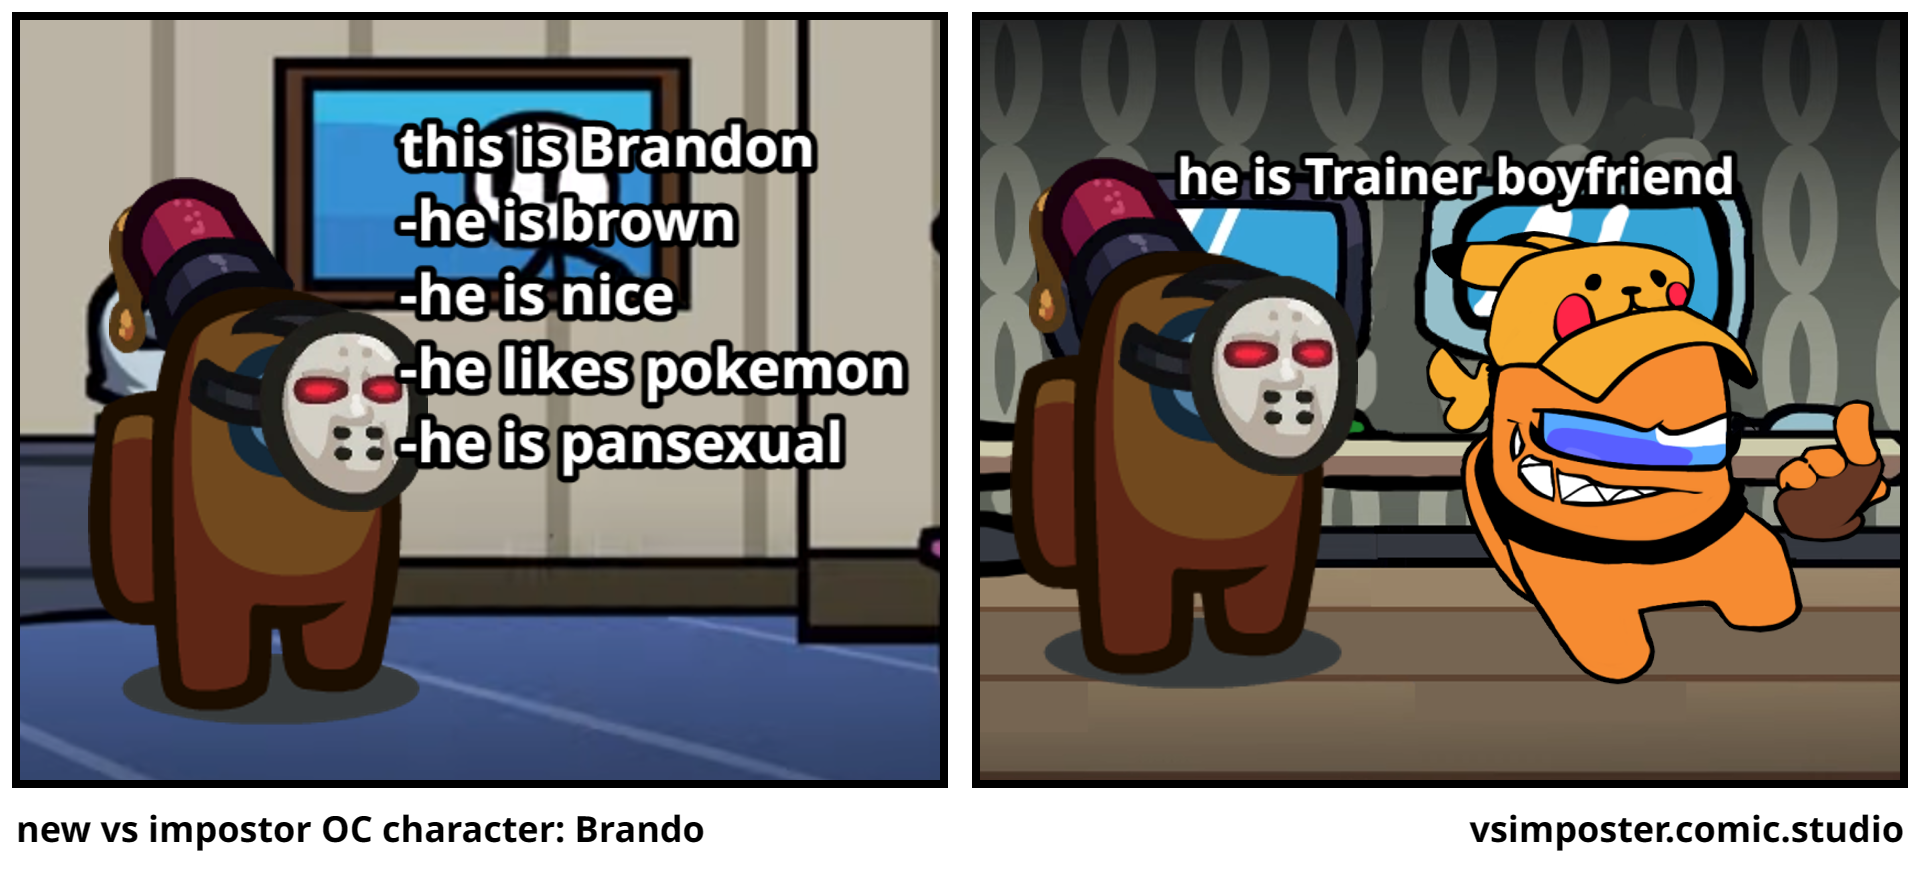 new vs impostor OC character: Brando